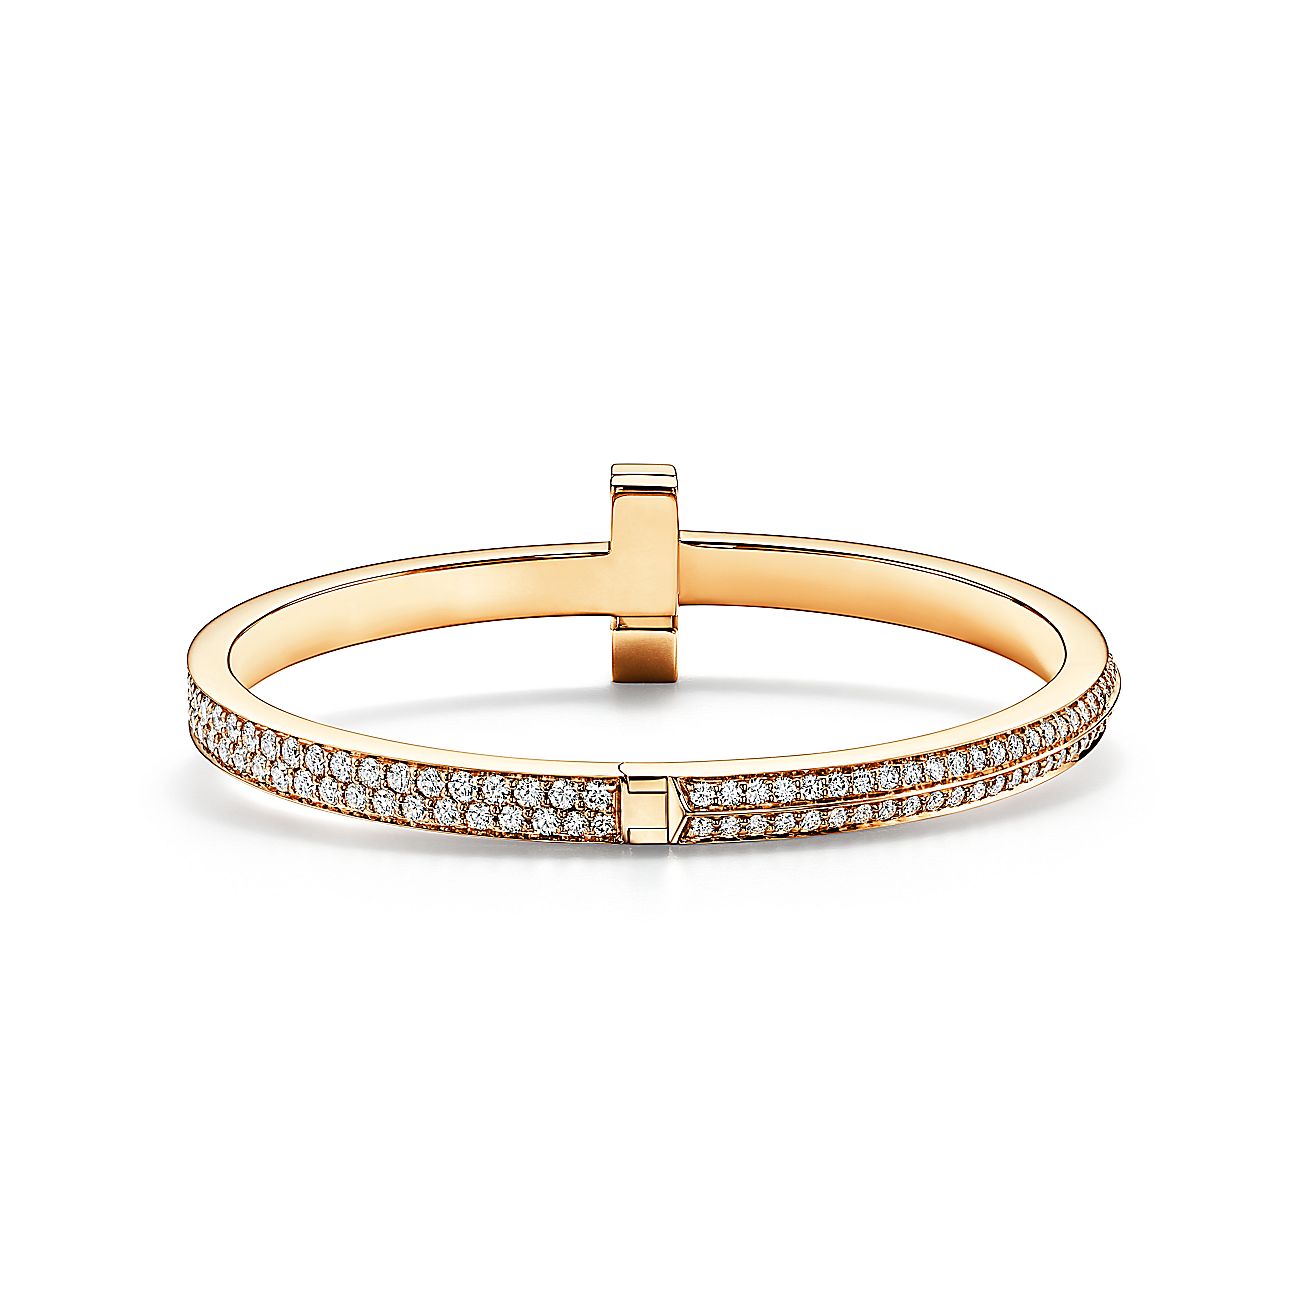 Tiffany T T1 Narrow Diamond Hinged Bangle Bracelet in 18K White Gold, Medium